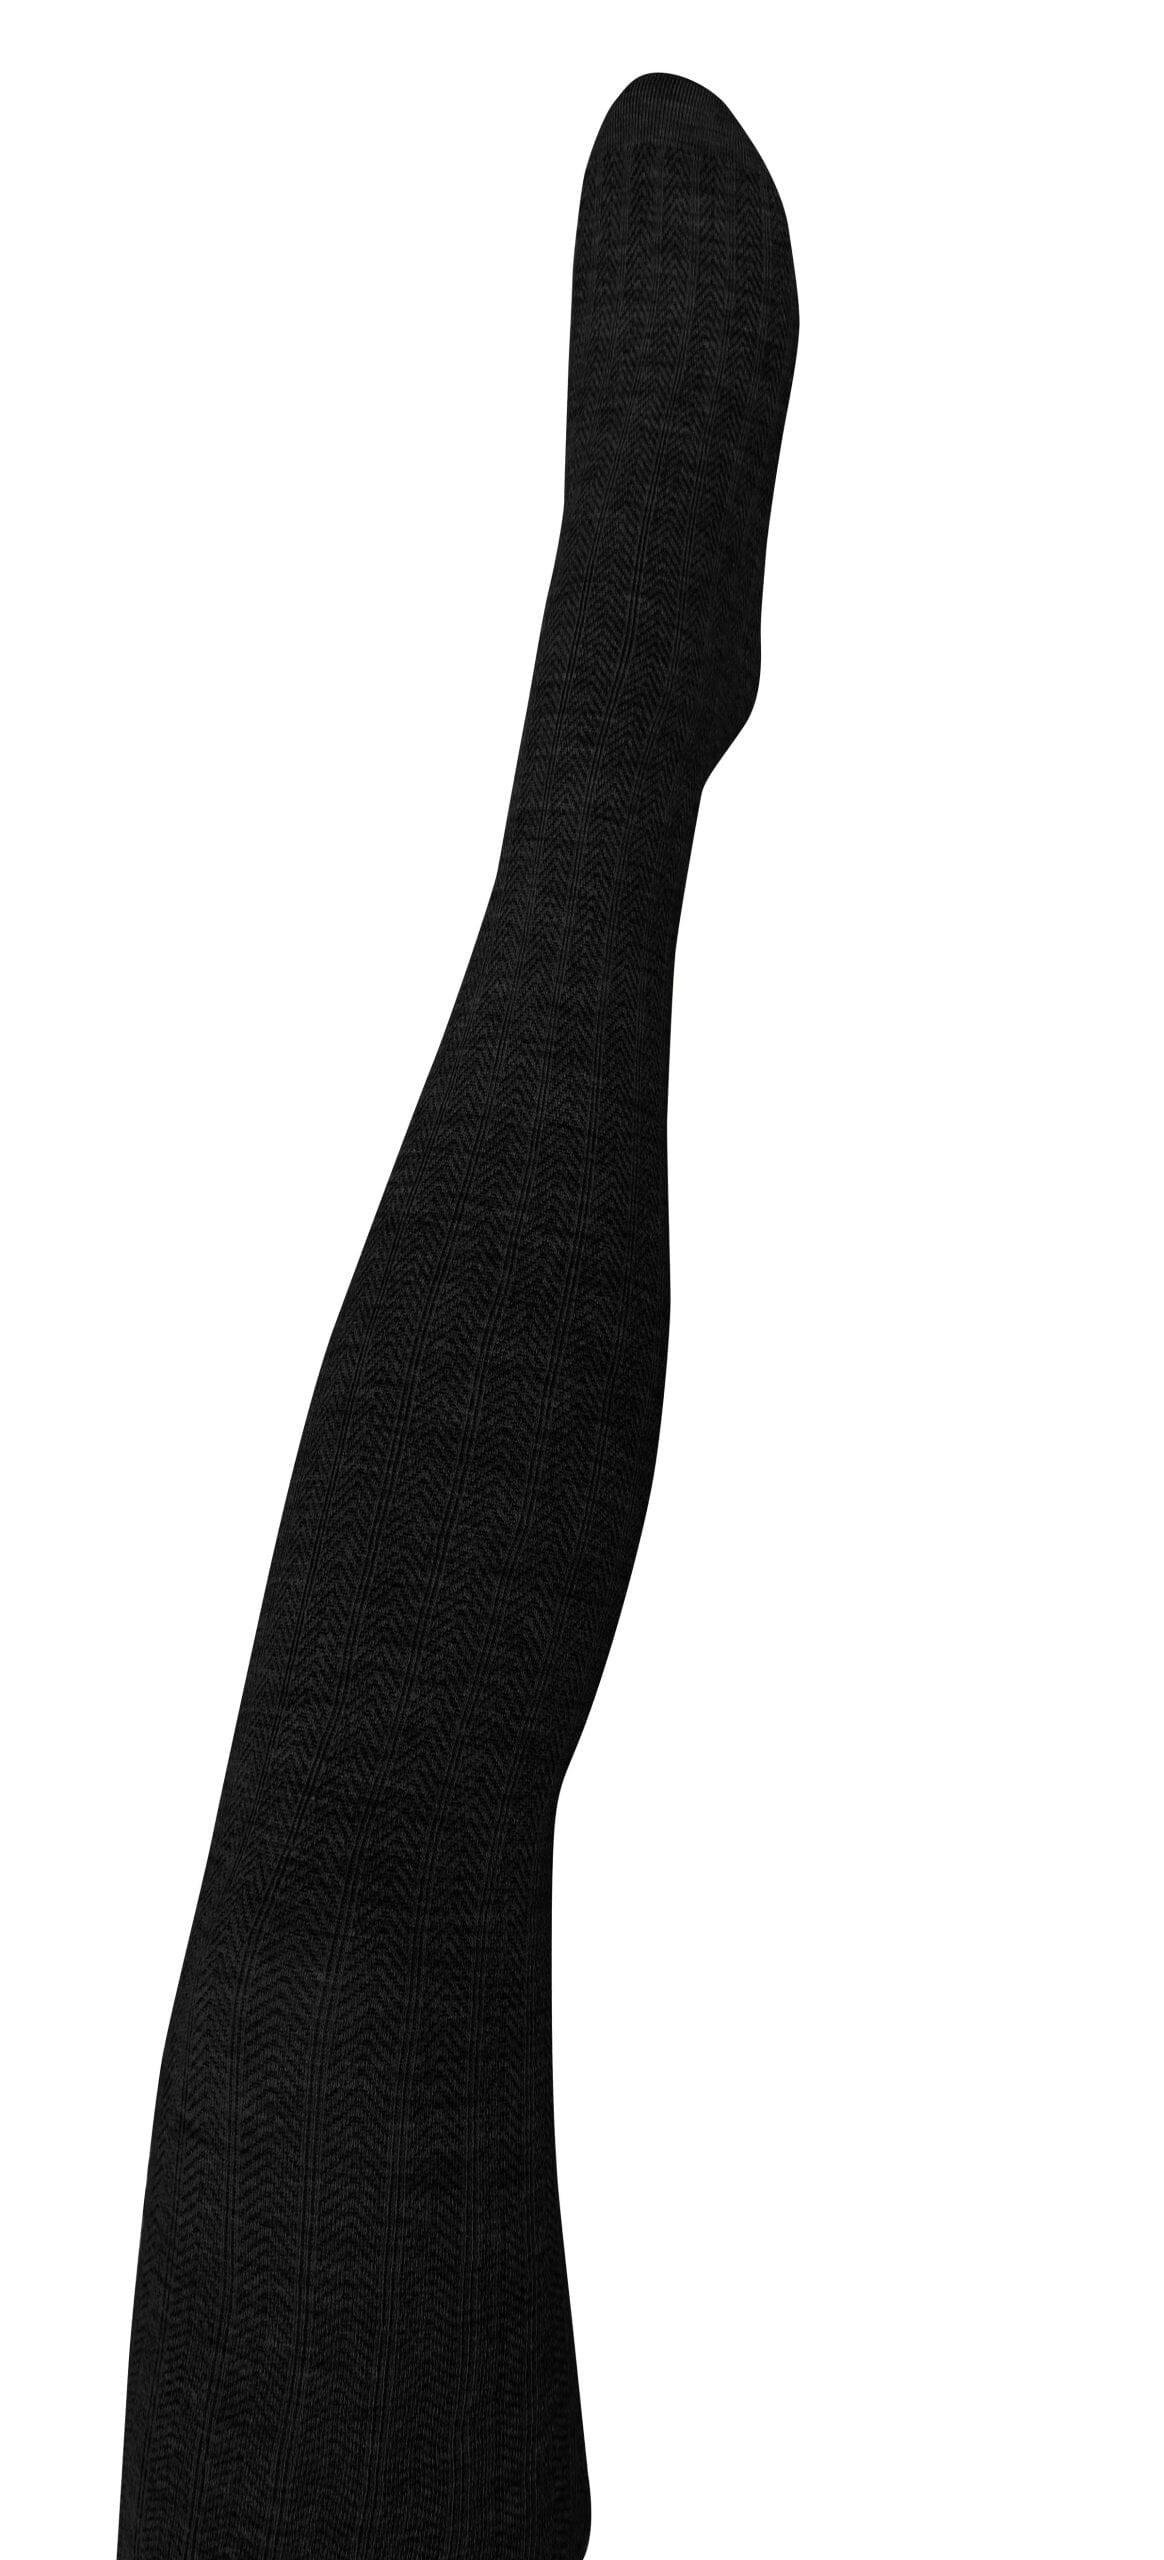 ‘Martini’ Merino Wool Tights - Tightology Tights Tightology Black Medium/Tall 